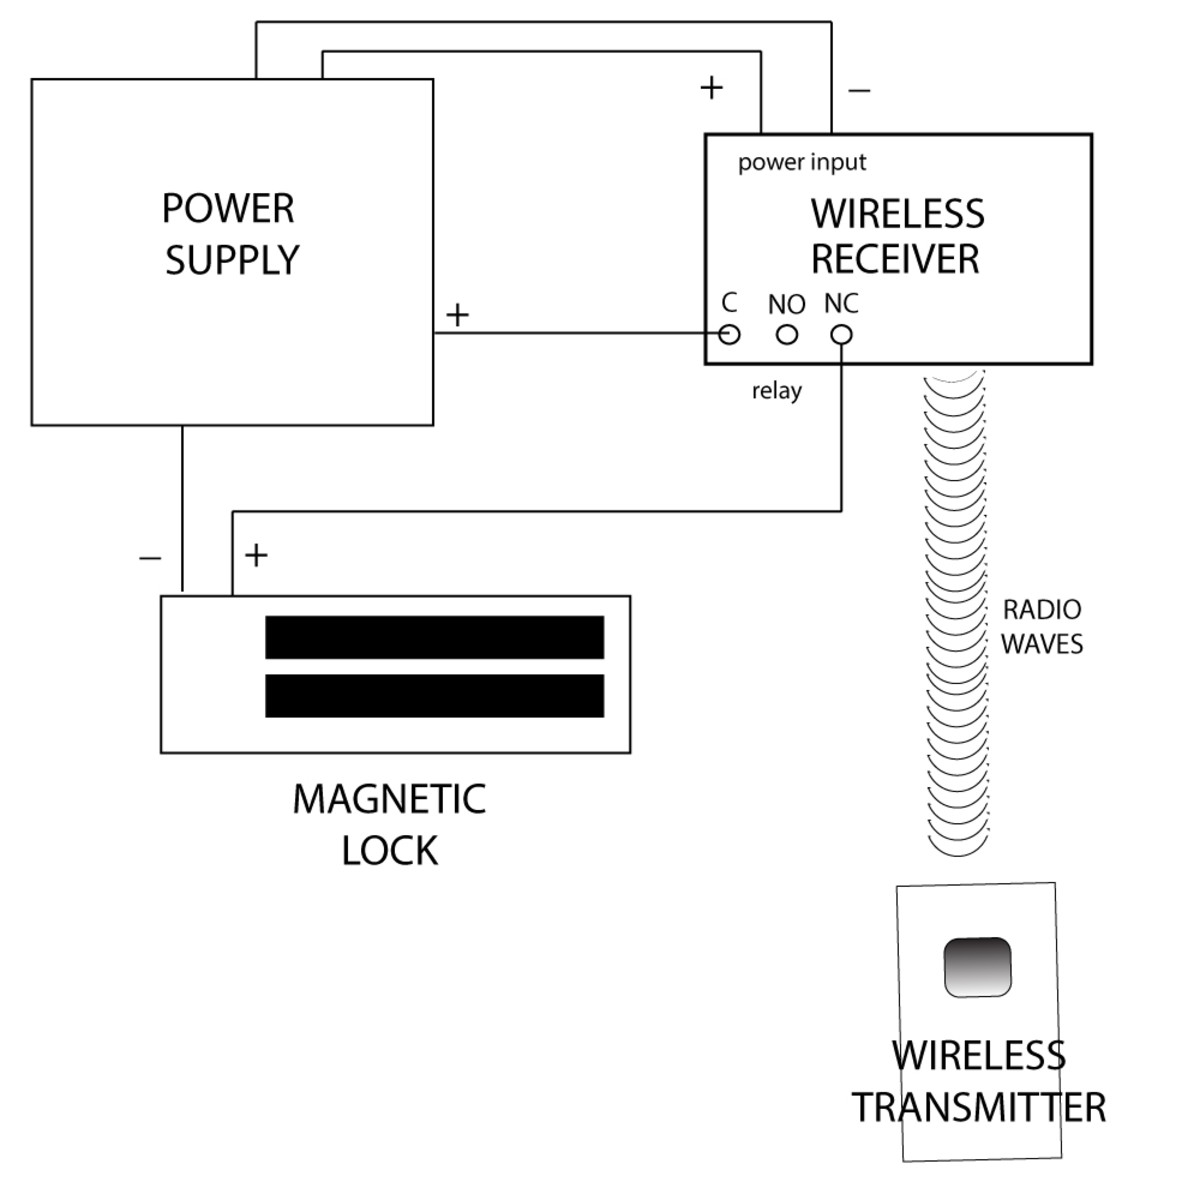 Basic Magnetic Door Lock System | HubPages